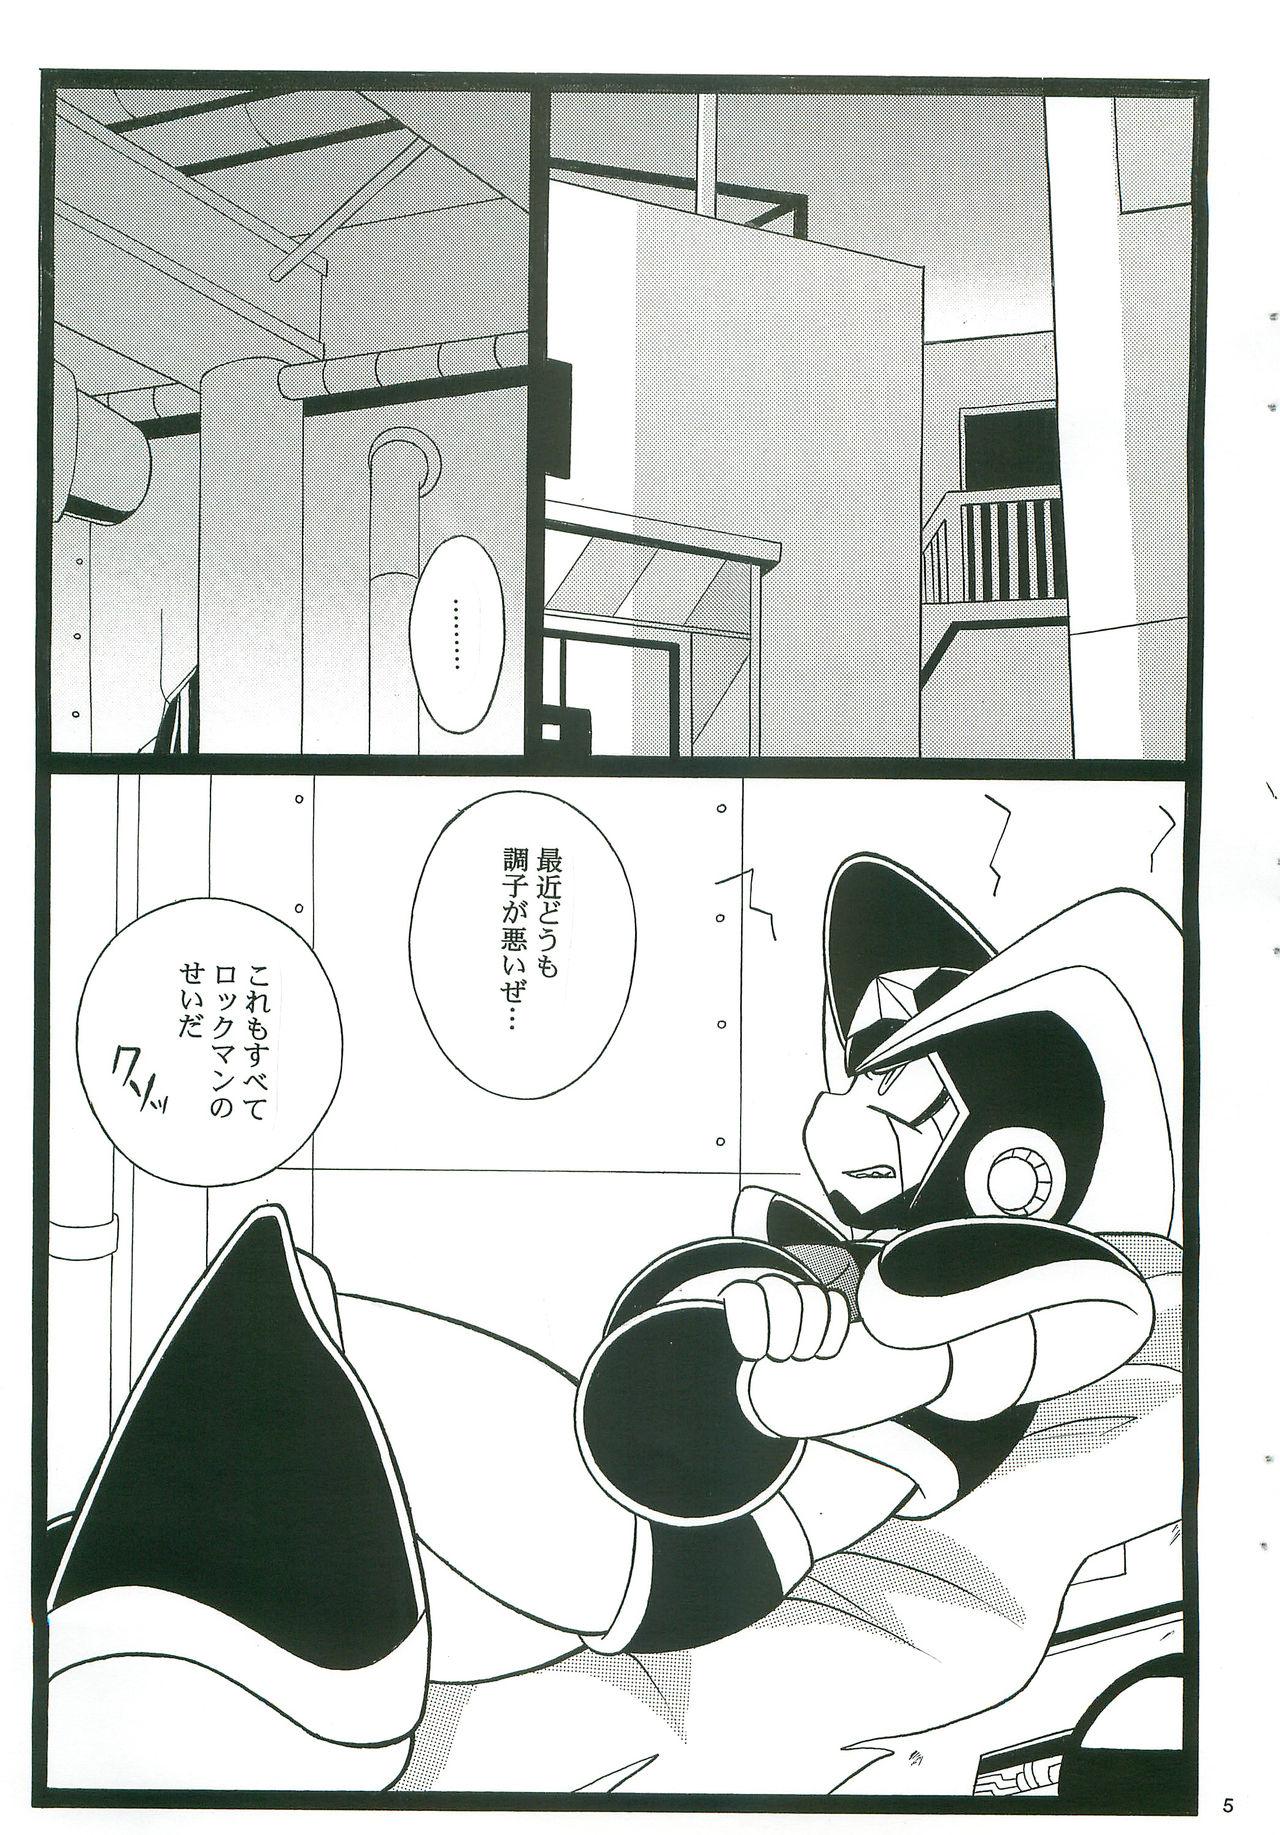 Corrida SLAP BASS next stage! - Megaman Highschool - Page 4